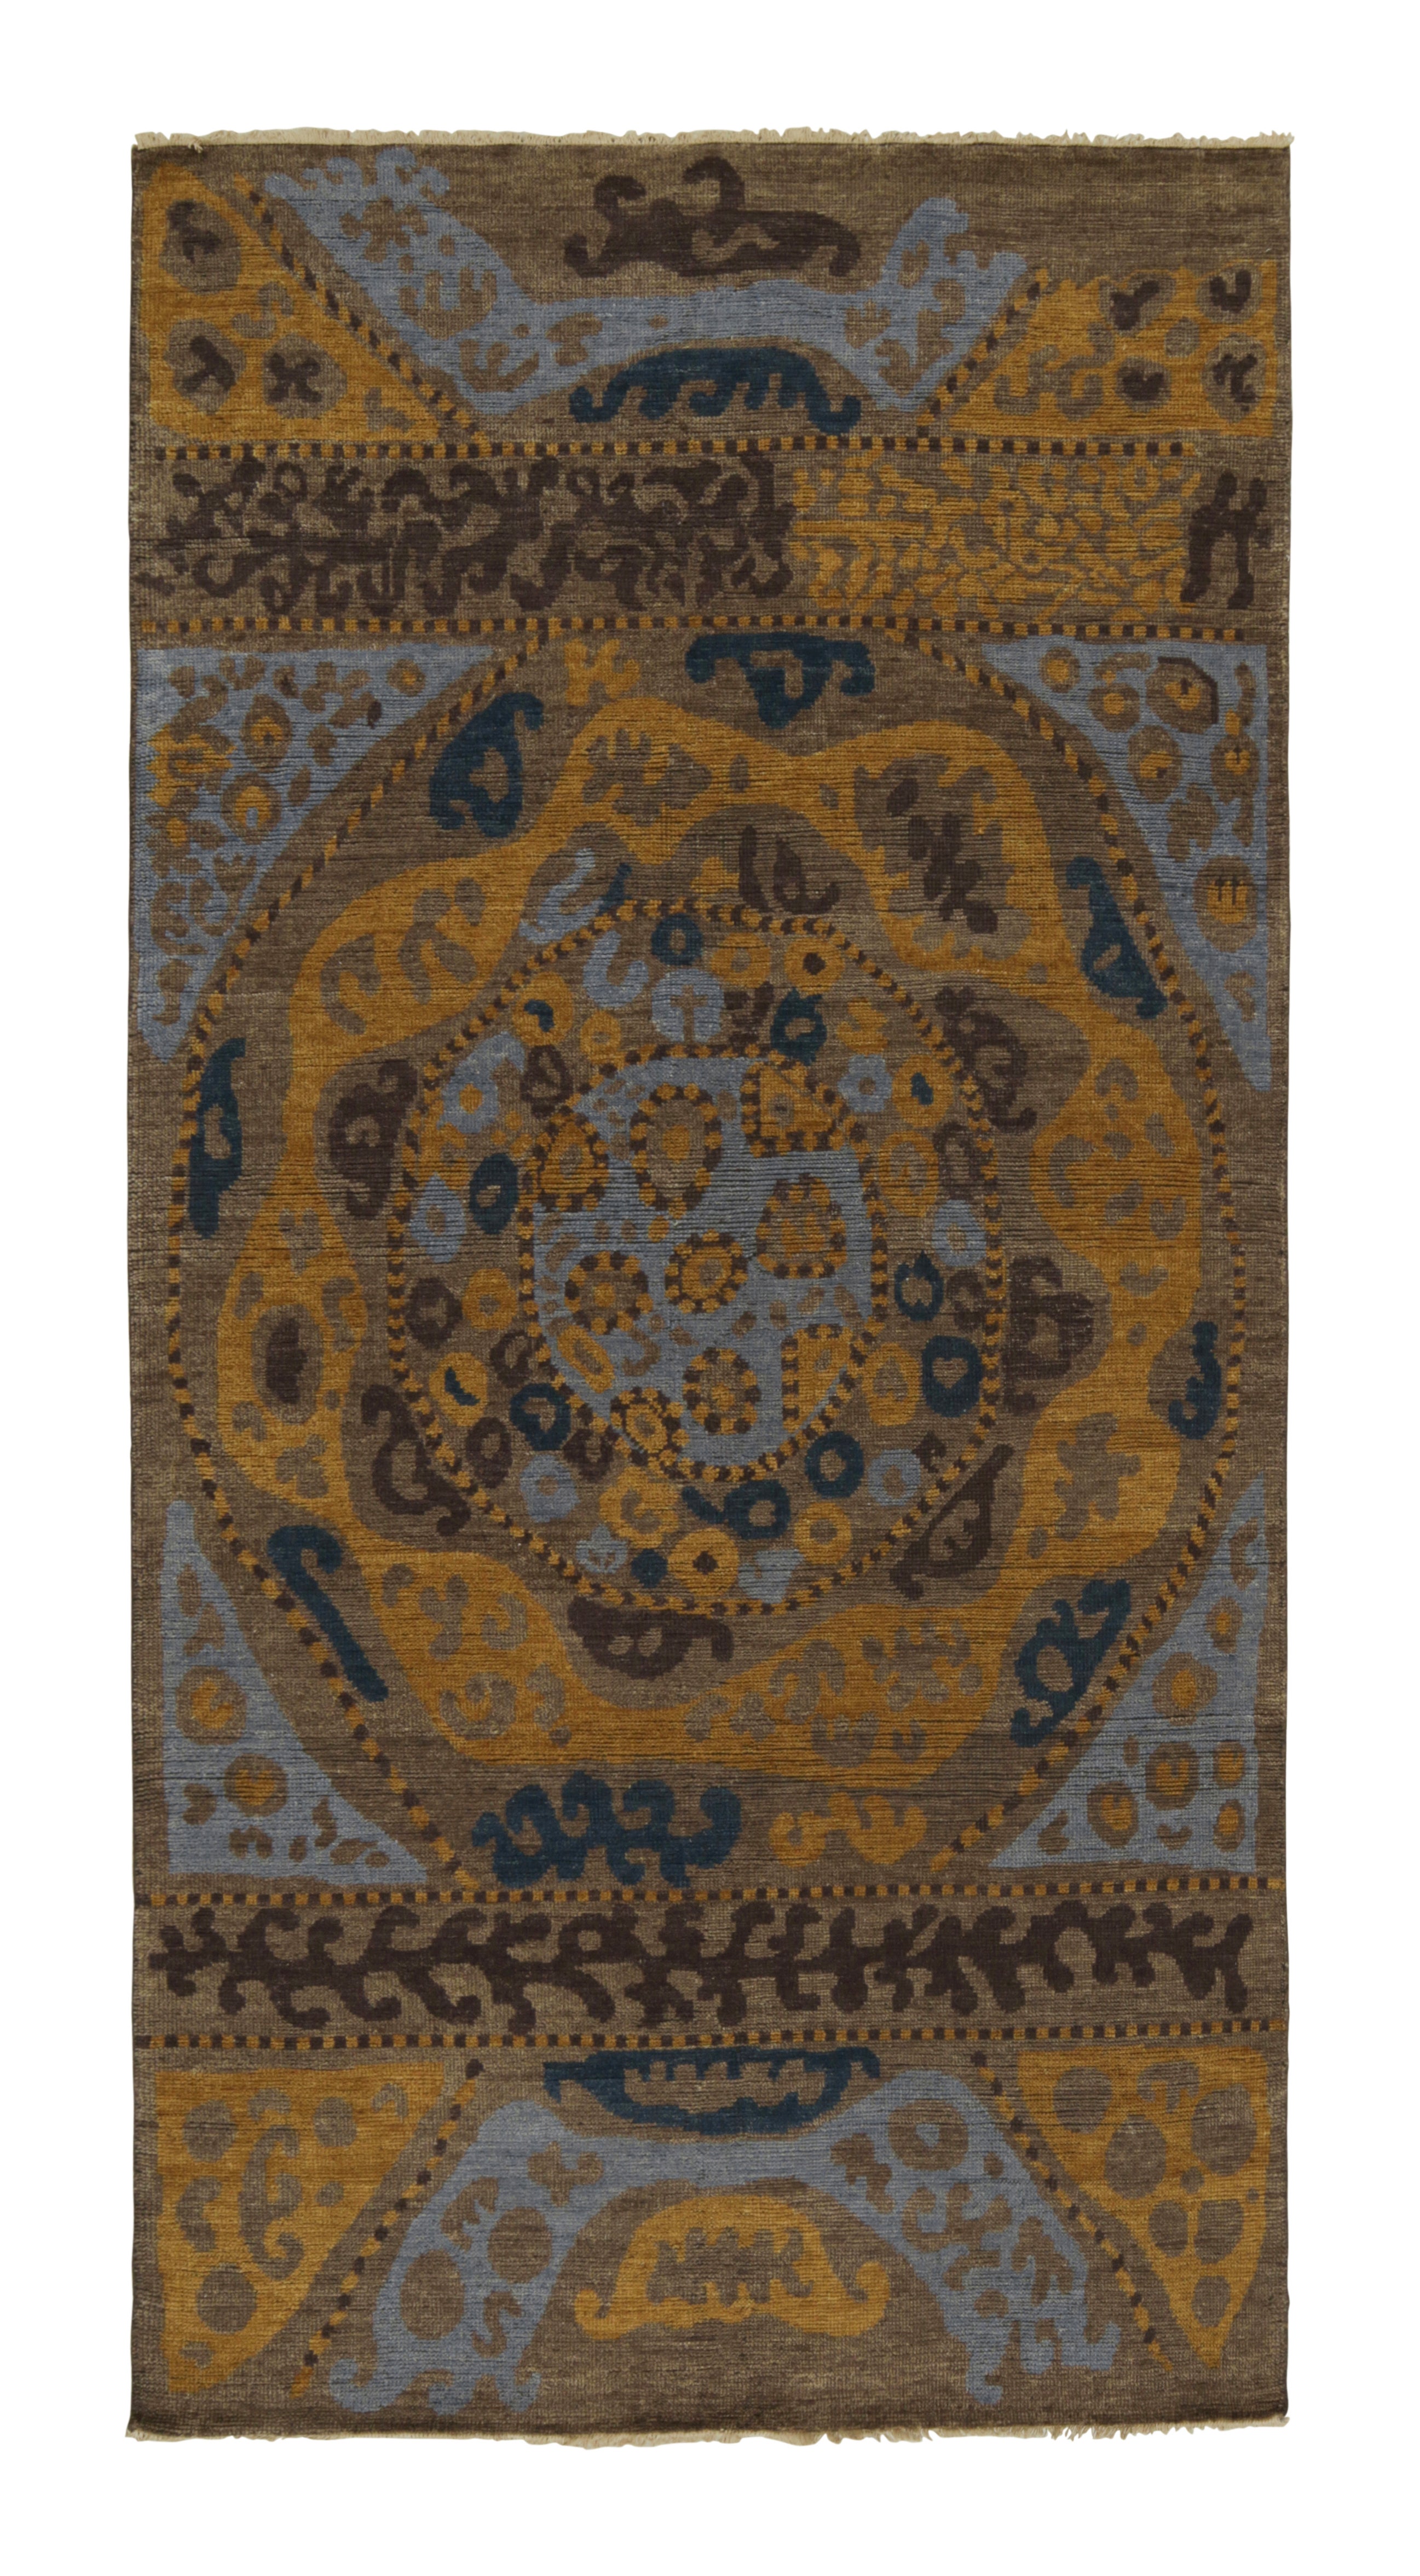 Rug & Kilim’s Tribal Inspired Rug in Blue, Brown, Gold Geometric Patterns